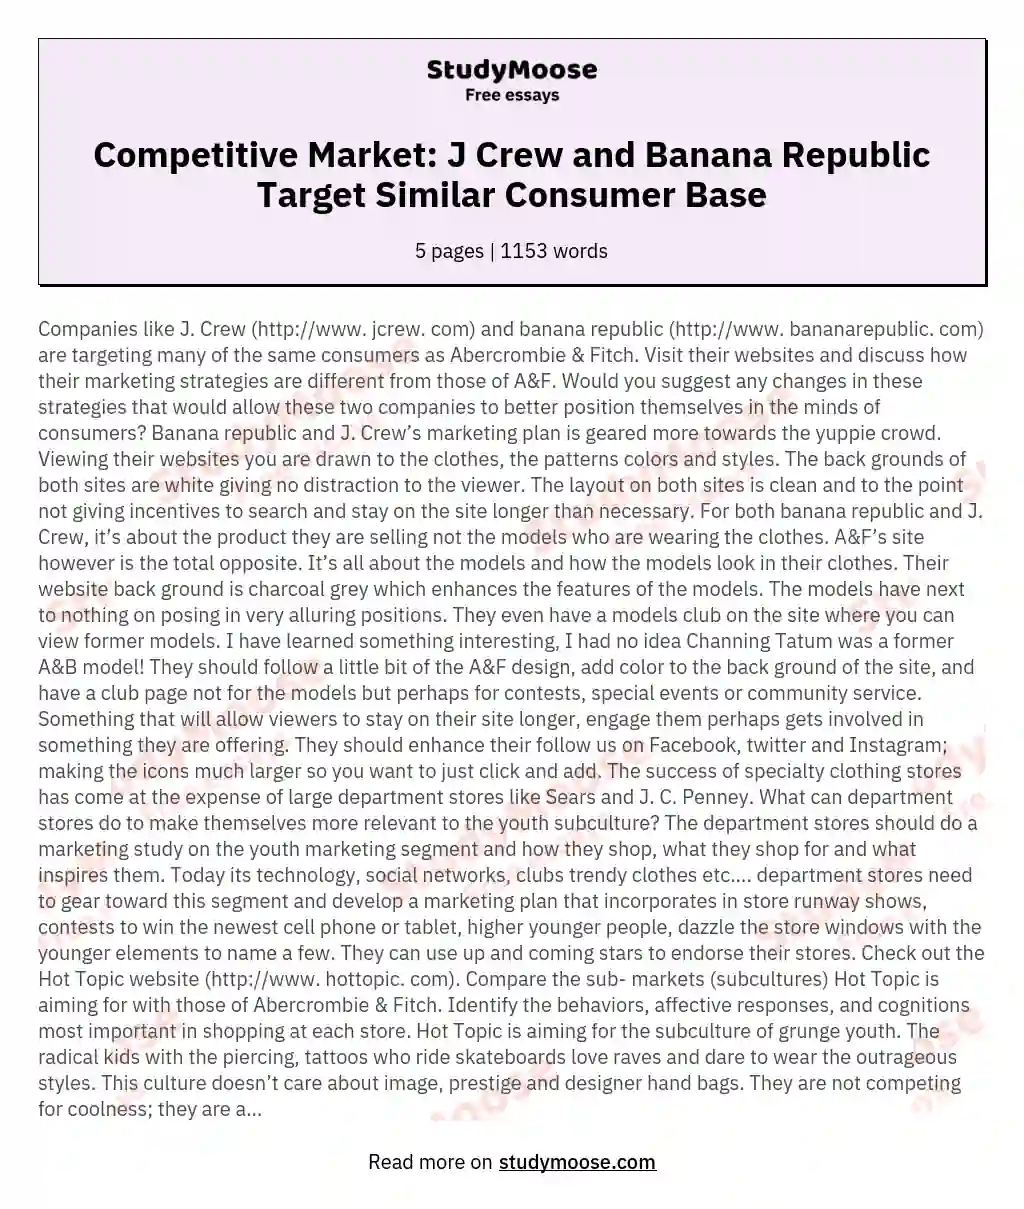 Competitive Market: J Crew and Banana Republic Target Similar Consumer Base essay